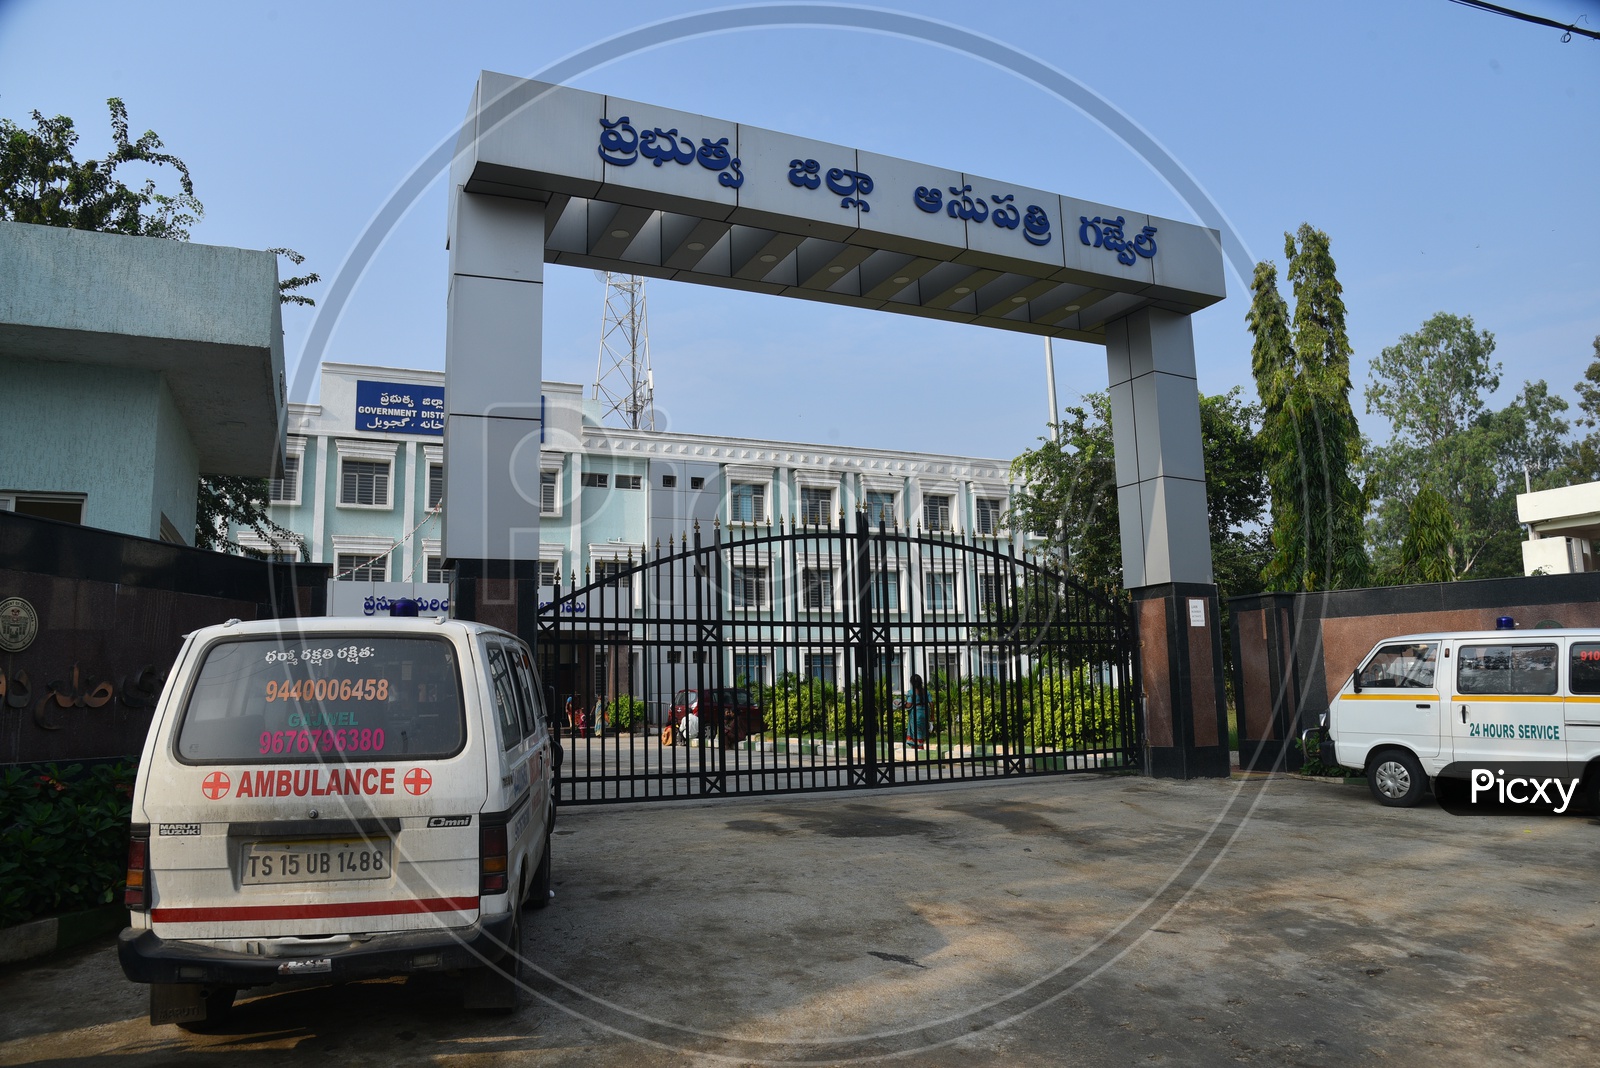 Government District Hospital, Gajwel,Telangana